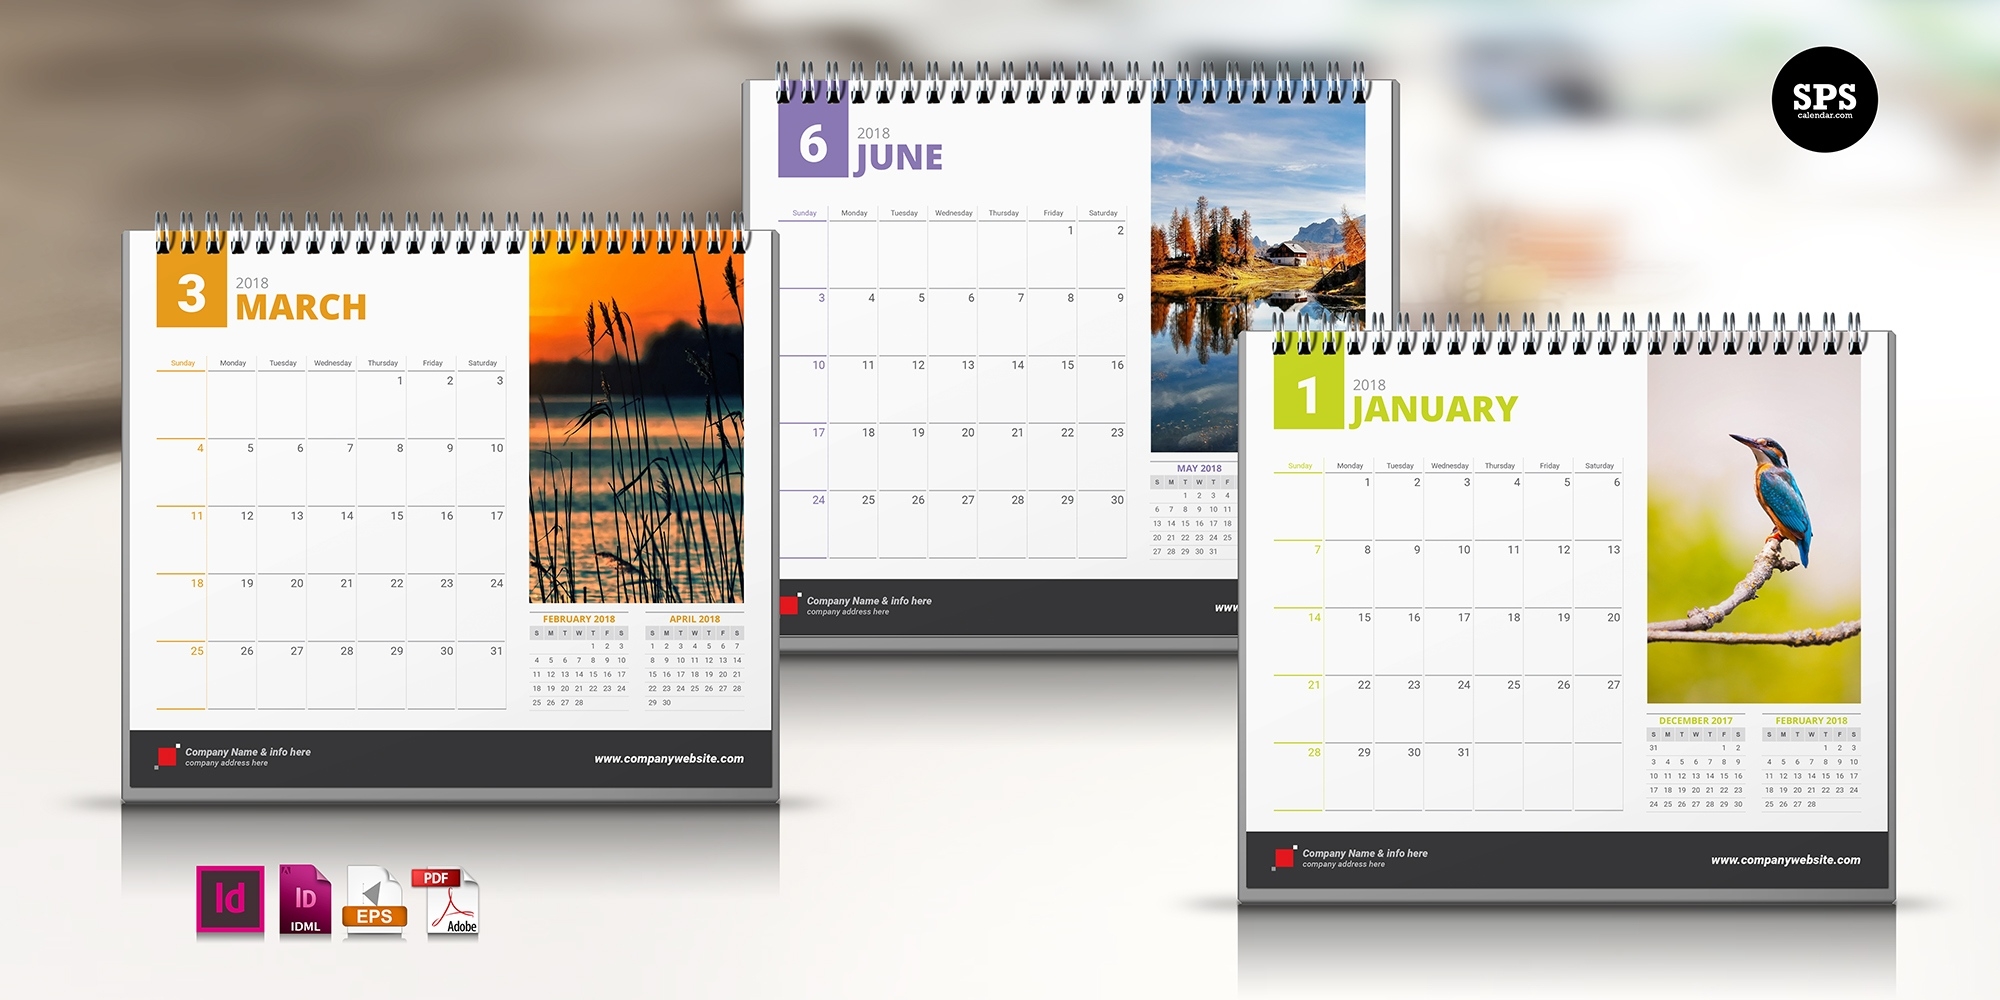 Free Template - Spscalendar 2020 Calendar Printable Free Indesign